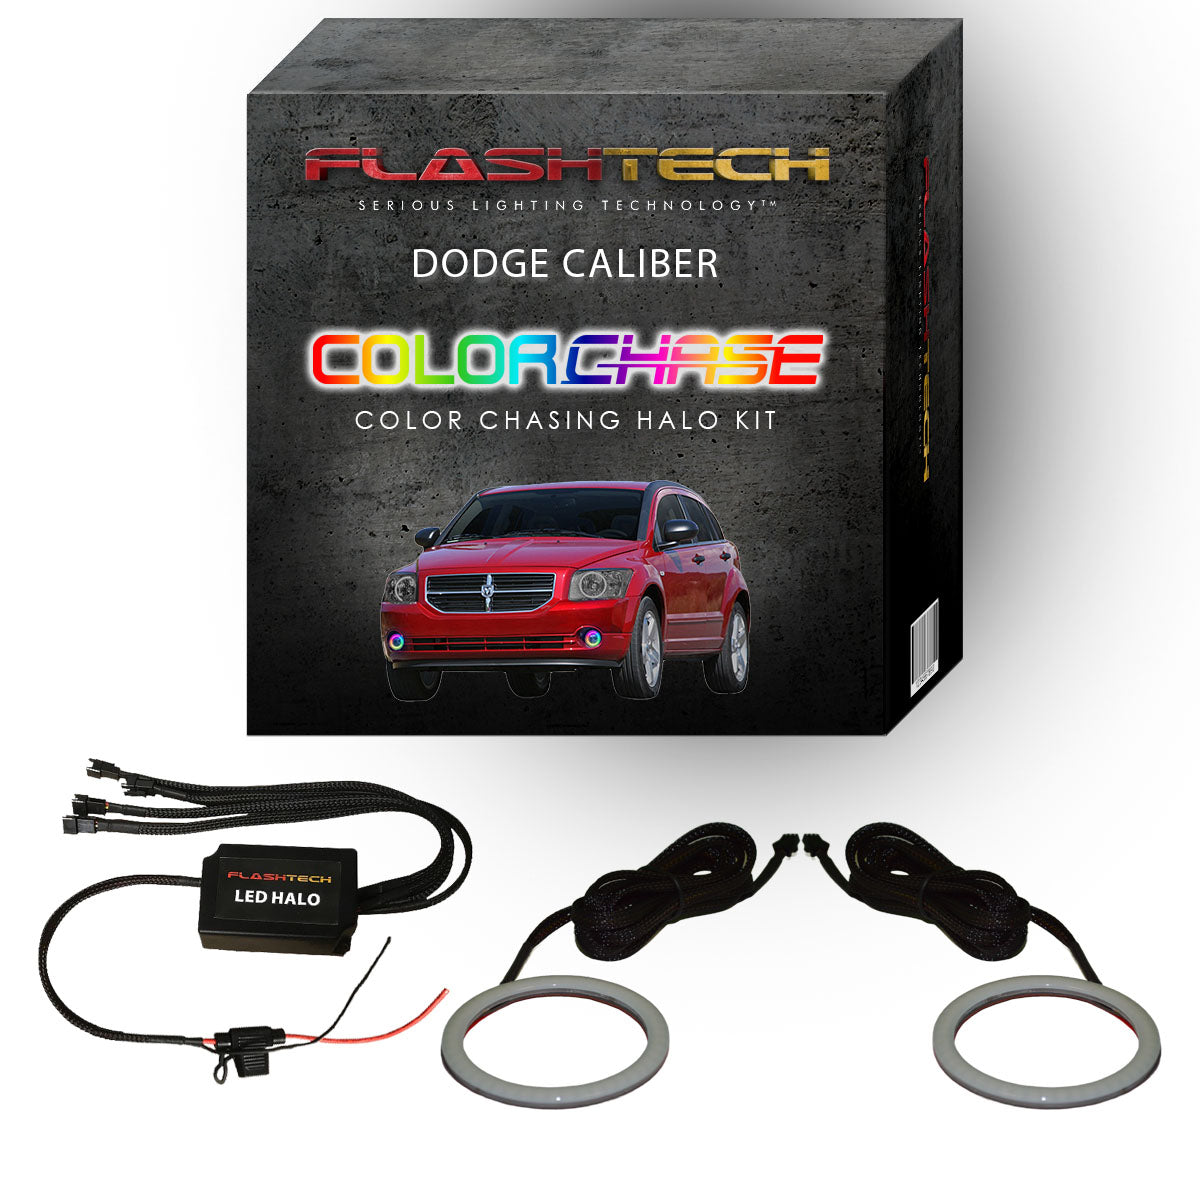 Dodge Caliber ColorChase LED Halo Fog Light Kit 2007-2012